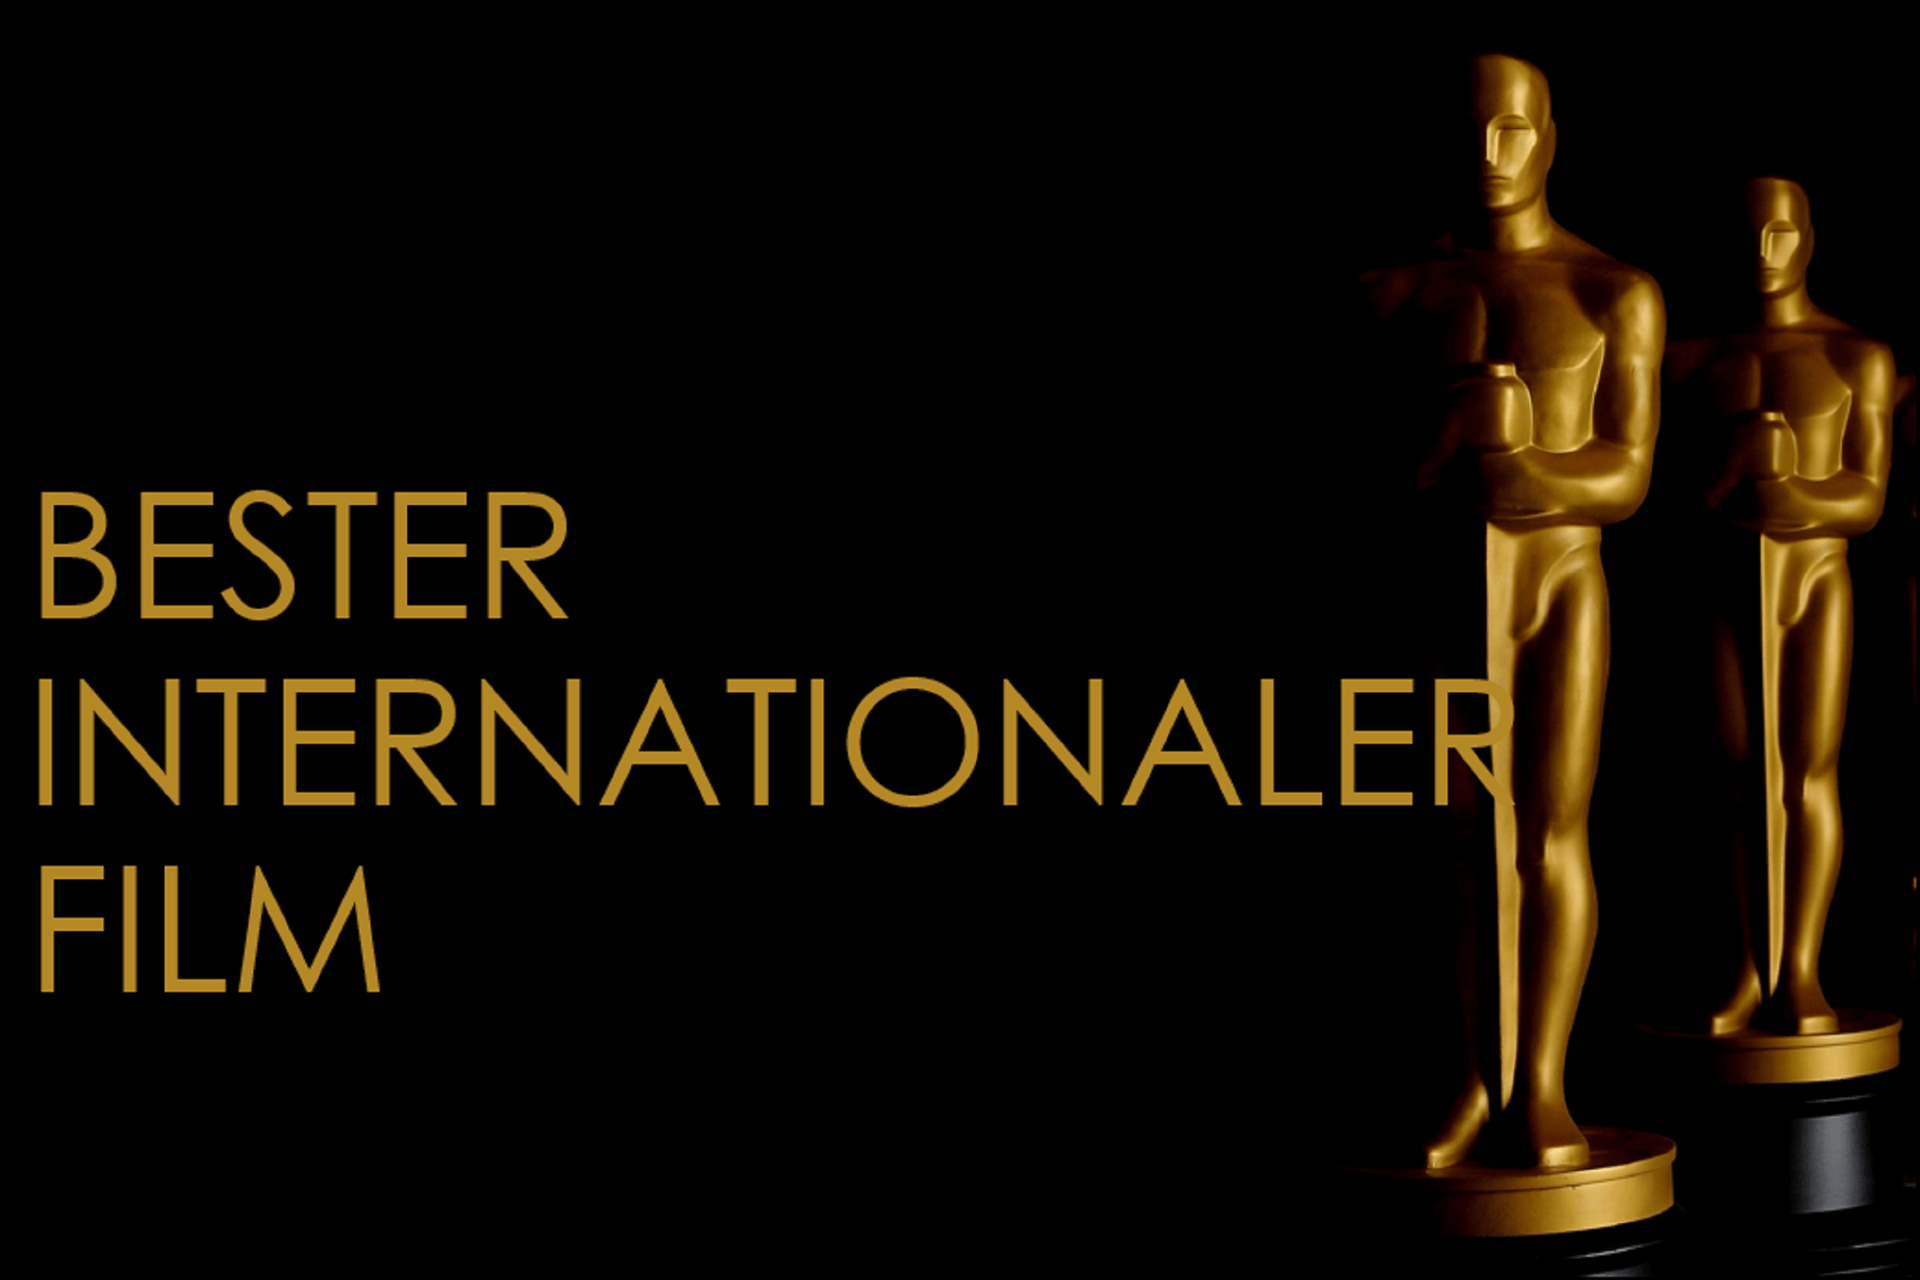 Kategorie: "Bester internationaler Film"